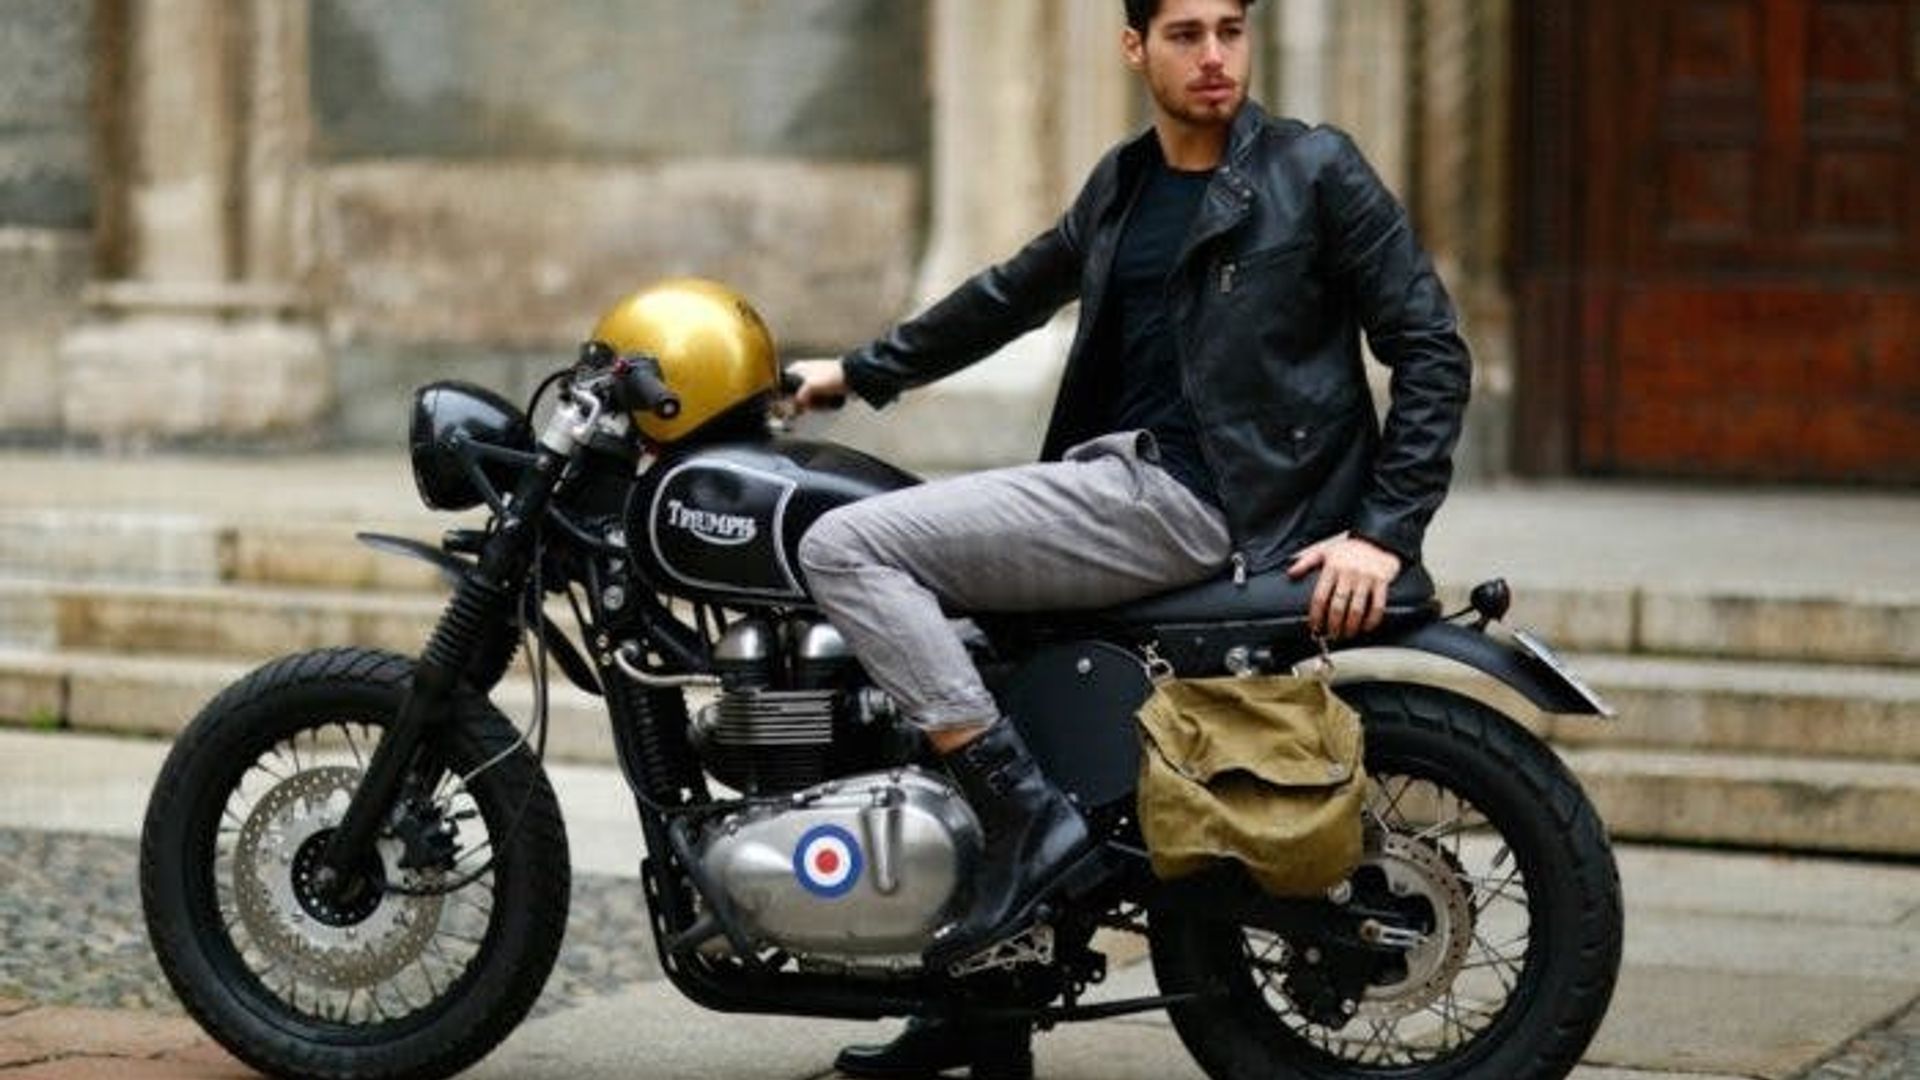 Chaussure moto vintage, cuir, homologuée ce, biker, homme